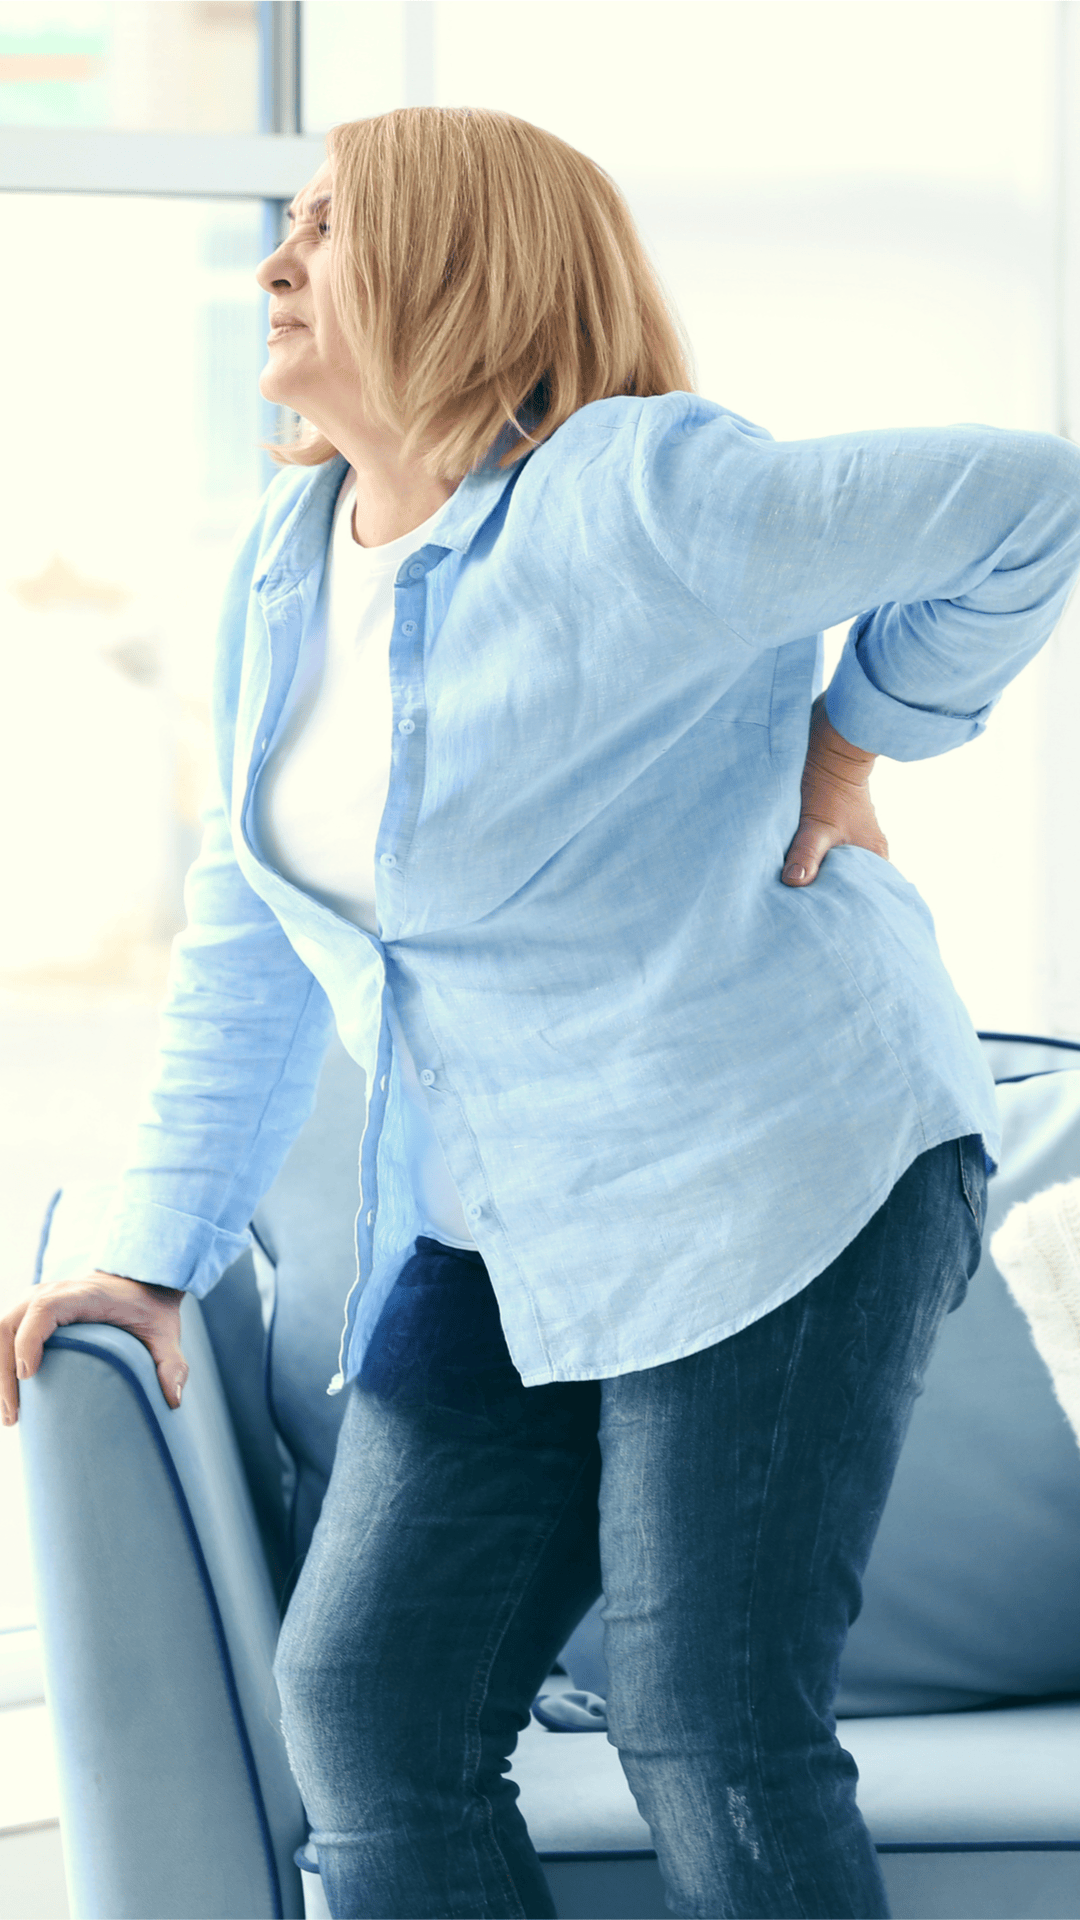 Dureri de spate in partea stanga – cauze si tratamente